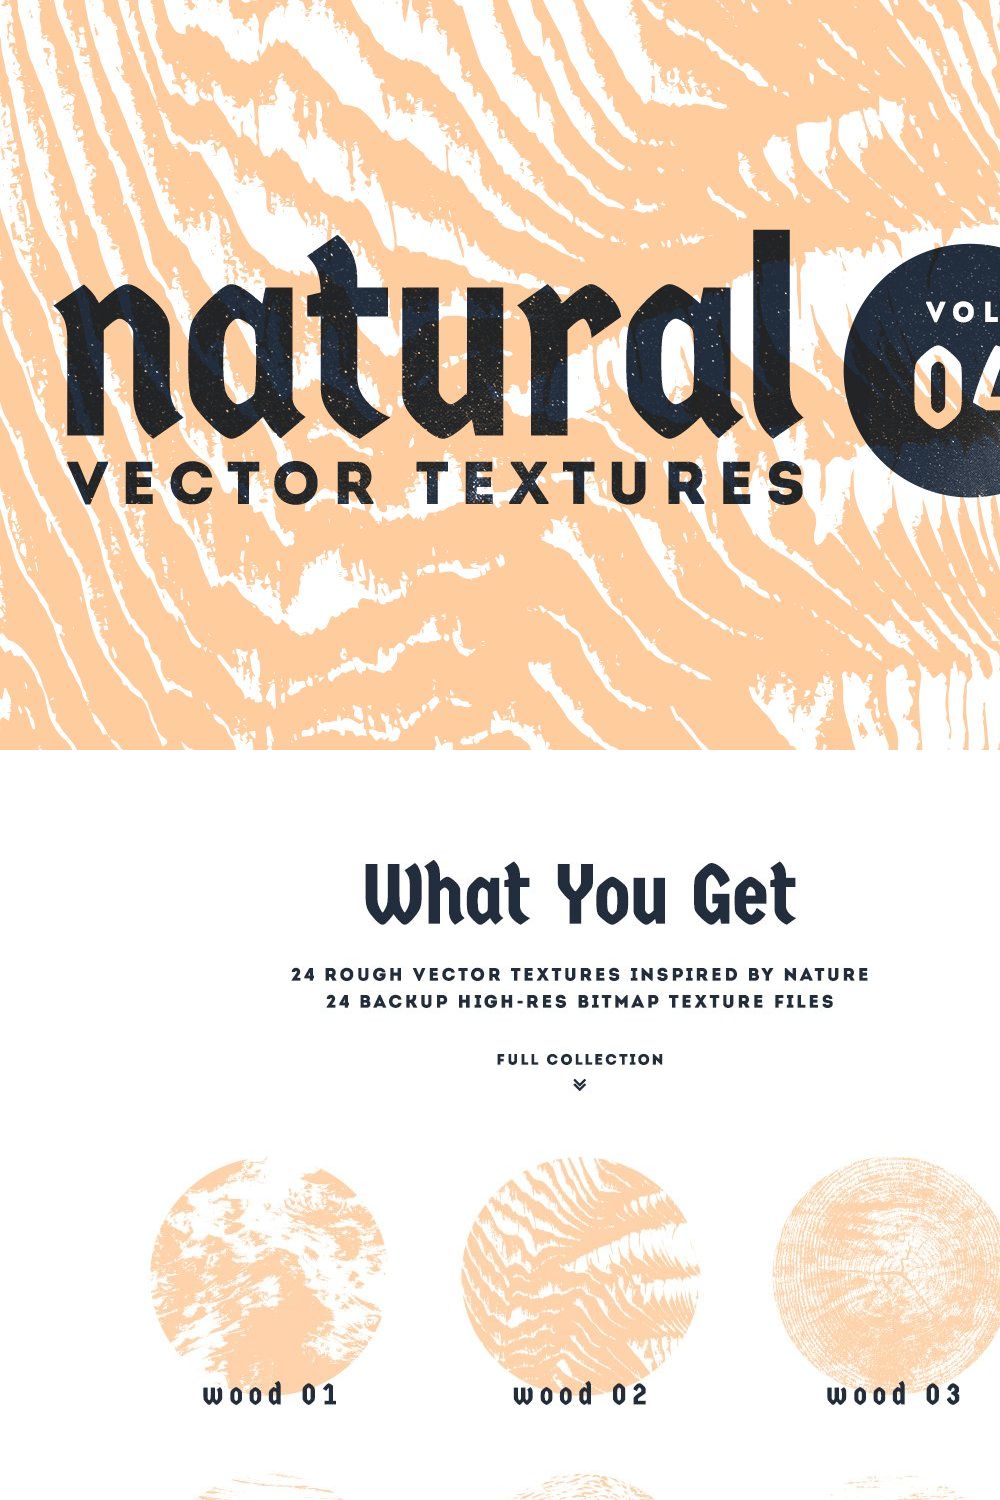 Natural Vector Textures | Vol. 4 pinterest preview image.